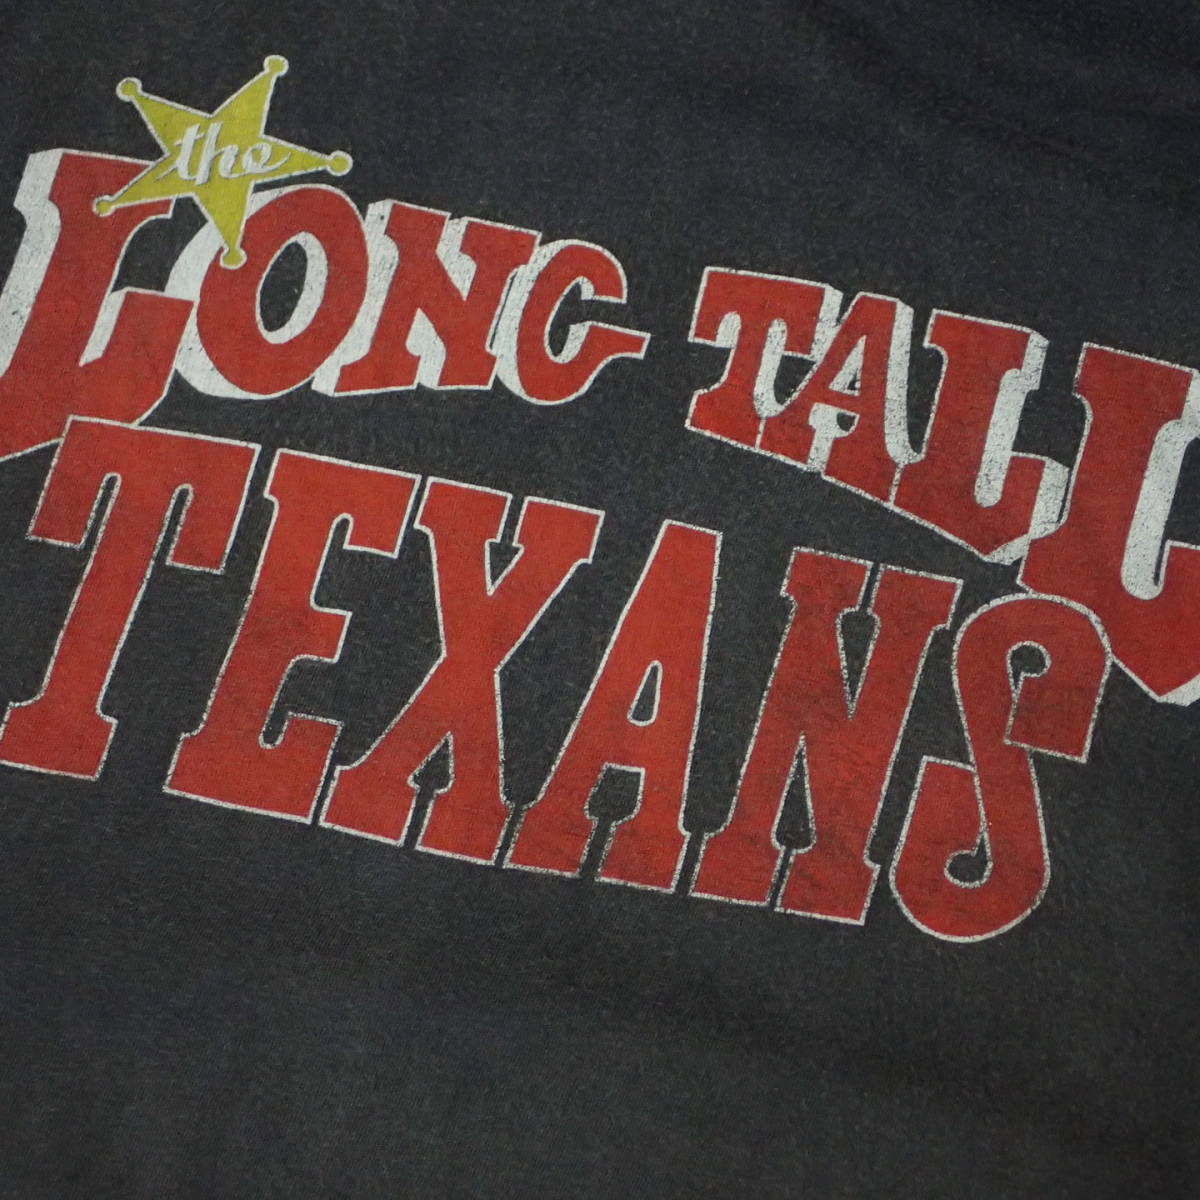 ■ 90s Long Tall Texans Vintage T-shirt ■ ロングトールテキサンズ ヴィンテージ 長袖 Tシャツ フード 付 当時物 本物 バンドT ロックT